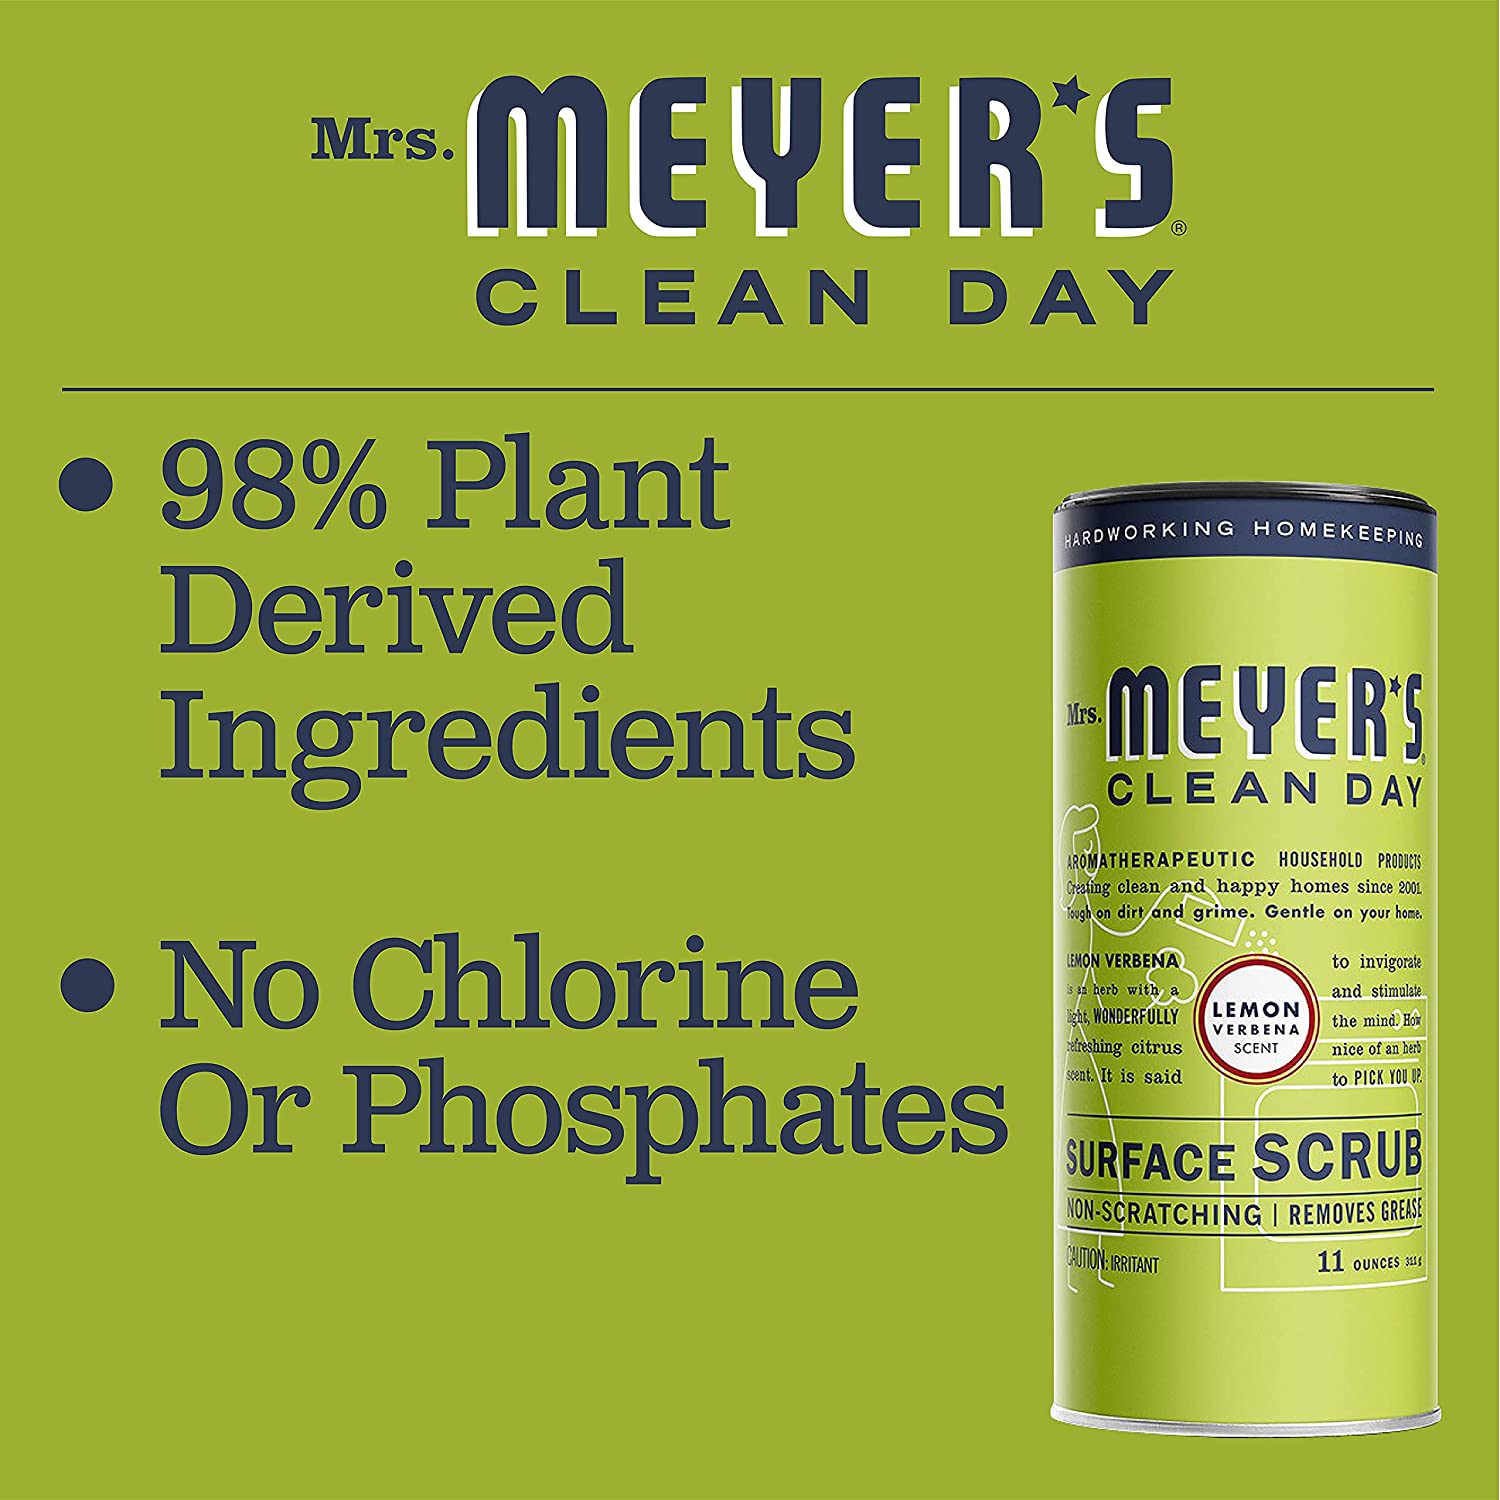 MRS. MEYER'S CLEAN DAY Surface Scrub in Lemon Verbena